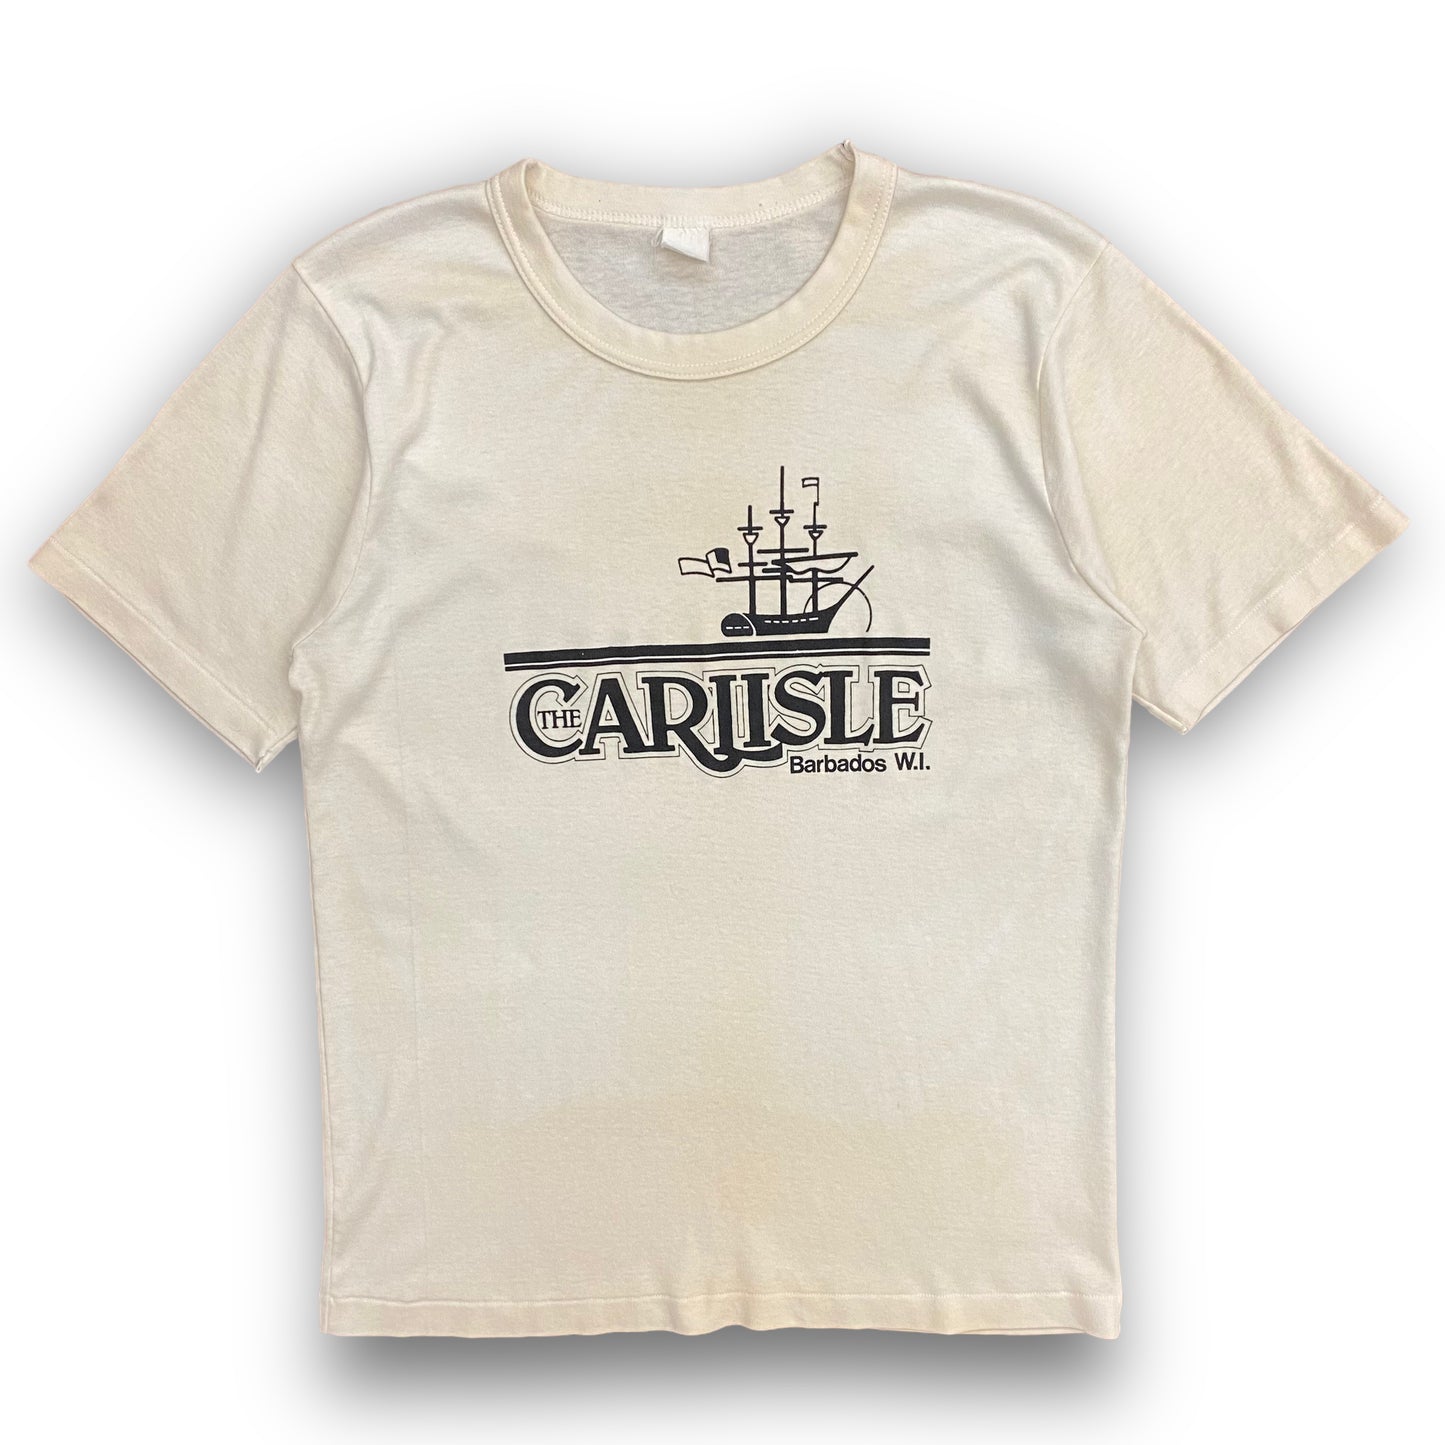 1970s The Carlisle: Barbados West Indies Tee - Size Medium